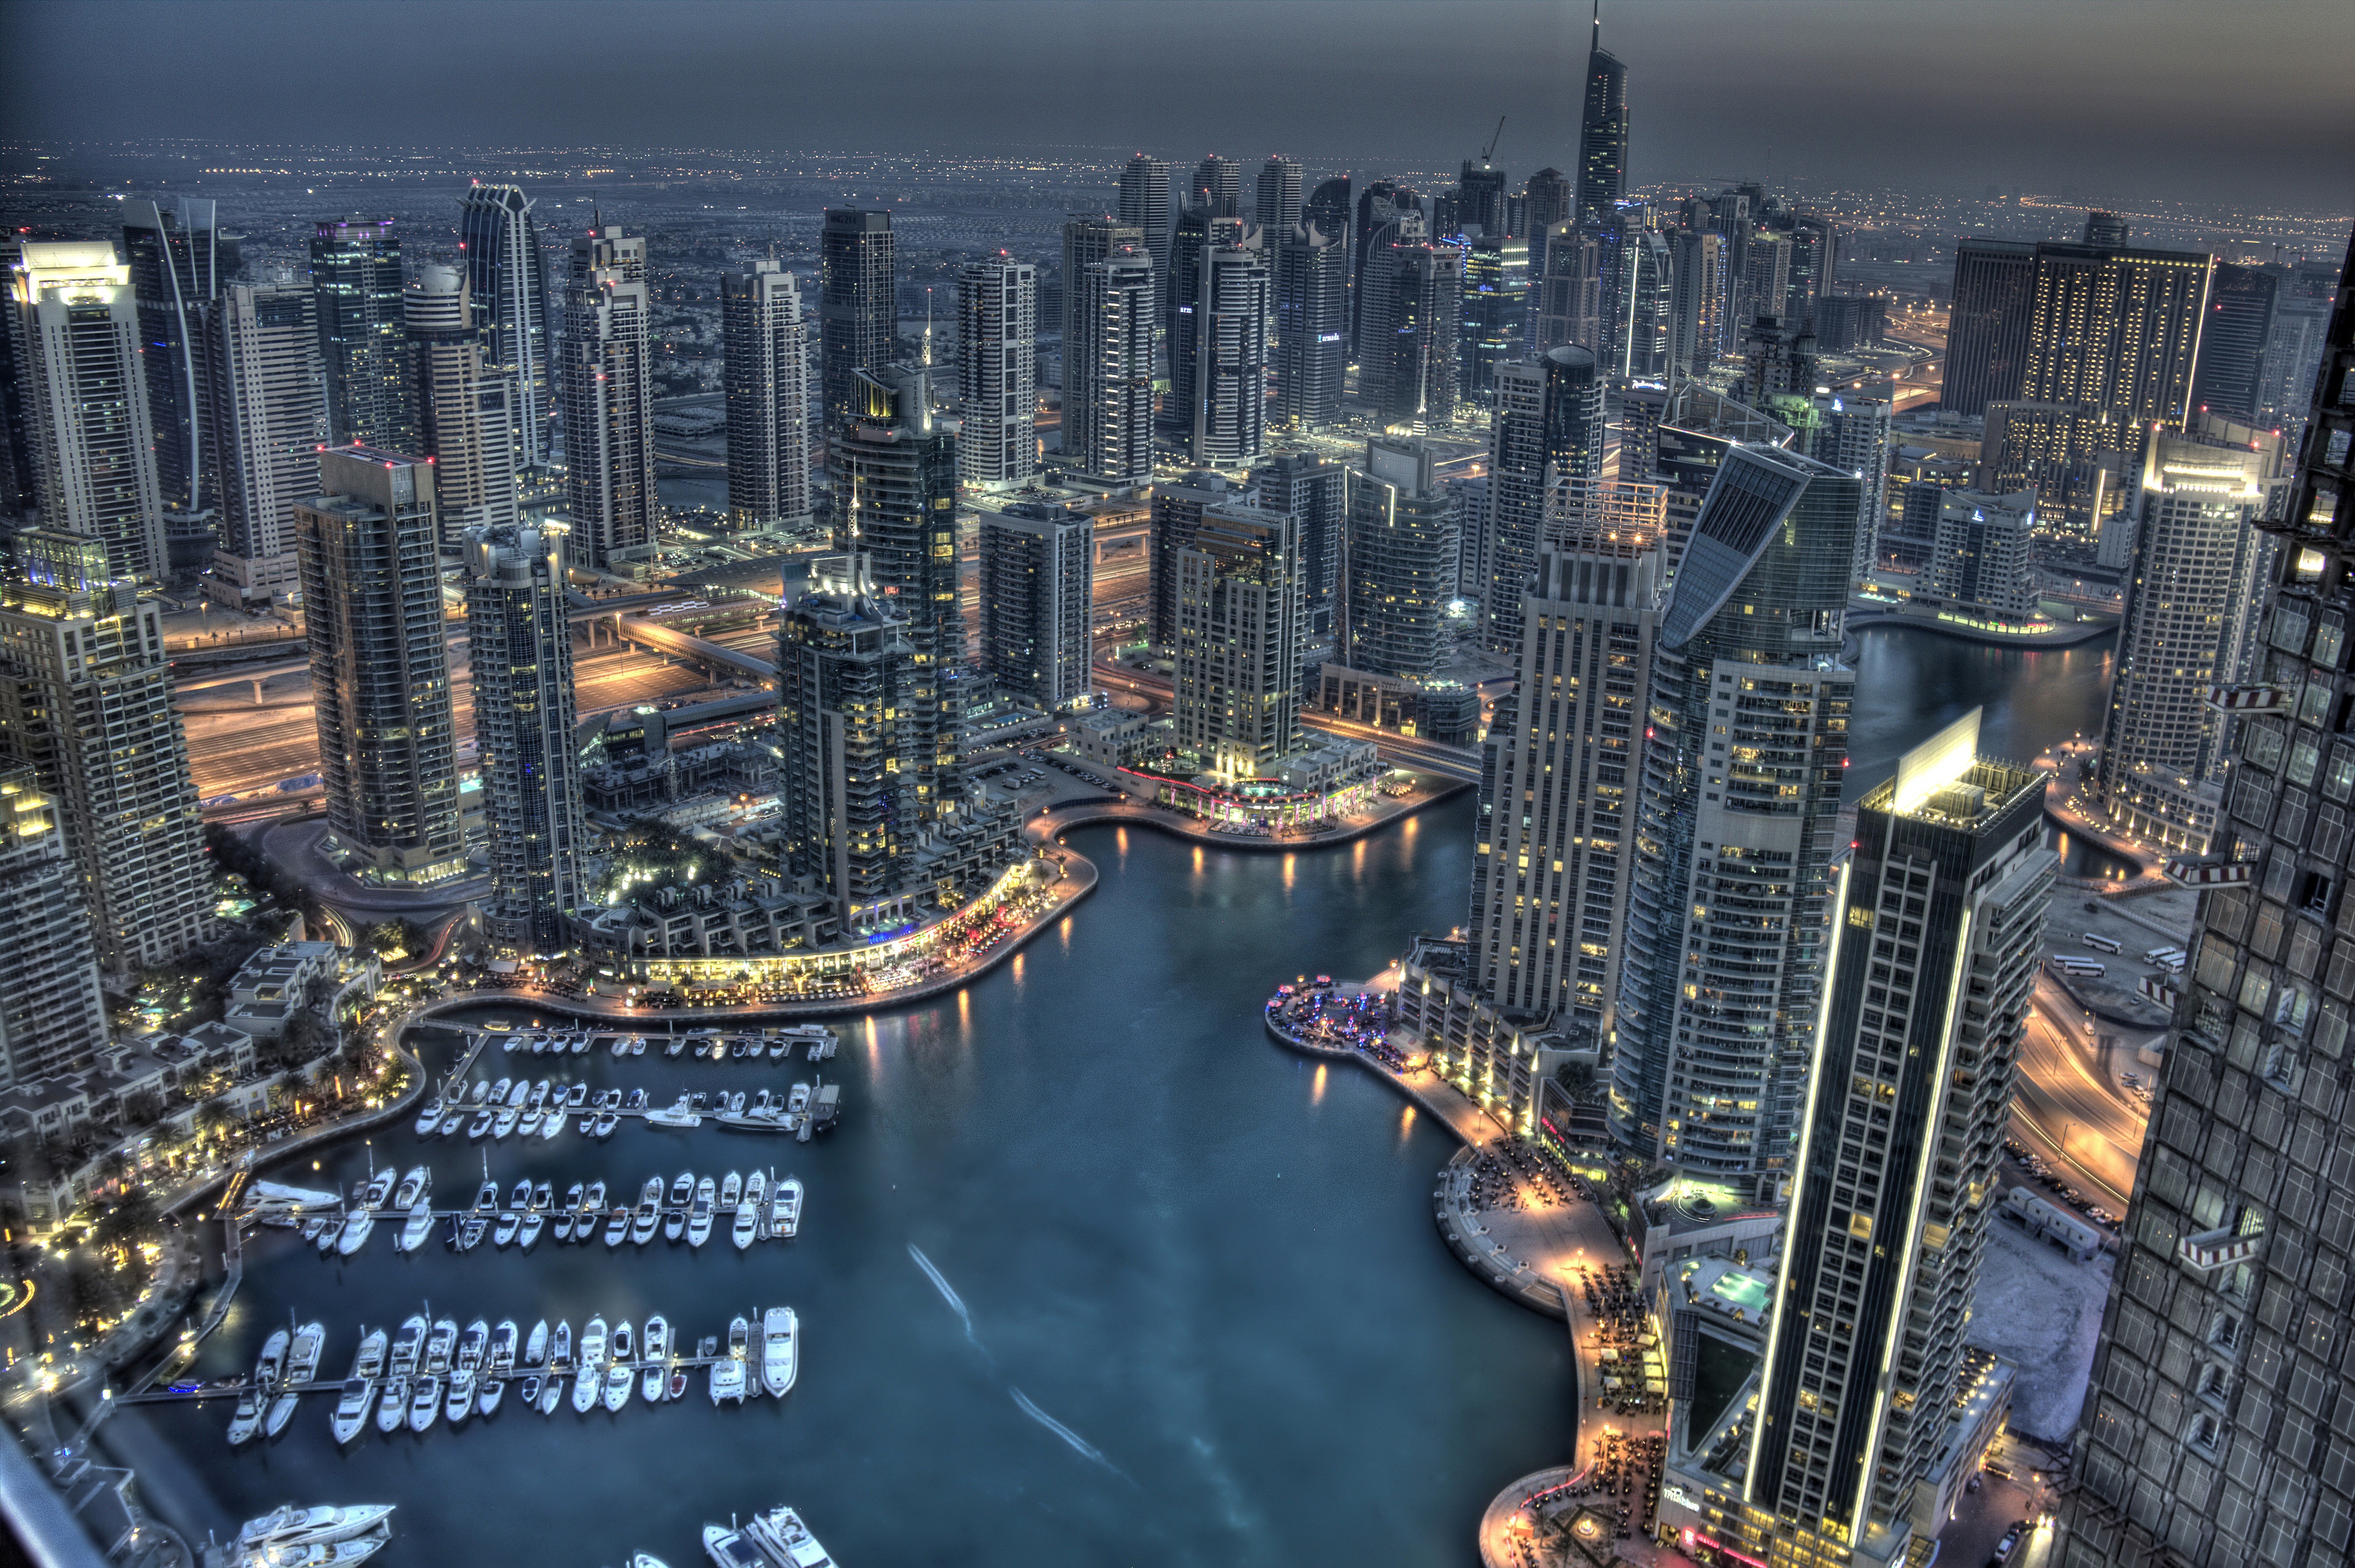 Dubai 4k Ultra HD Wallpaper by butti_s